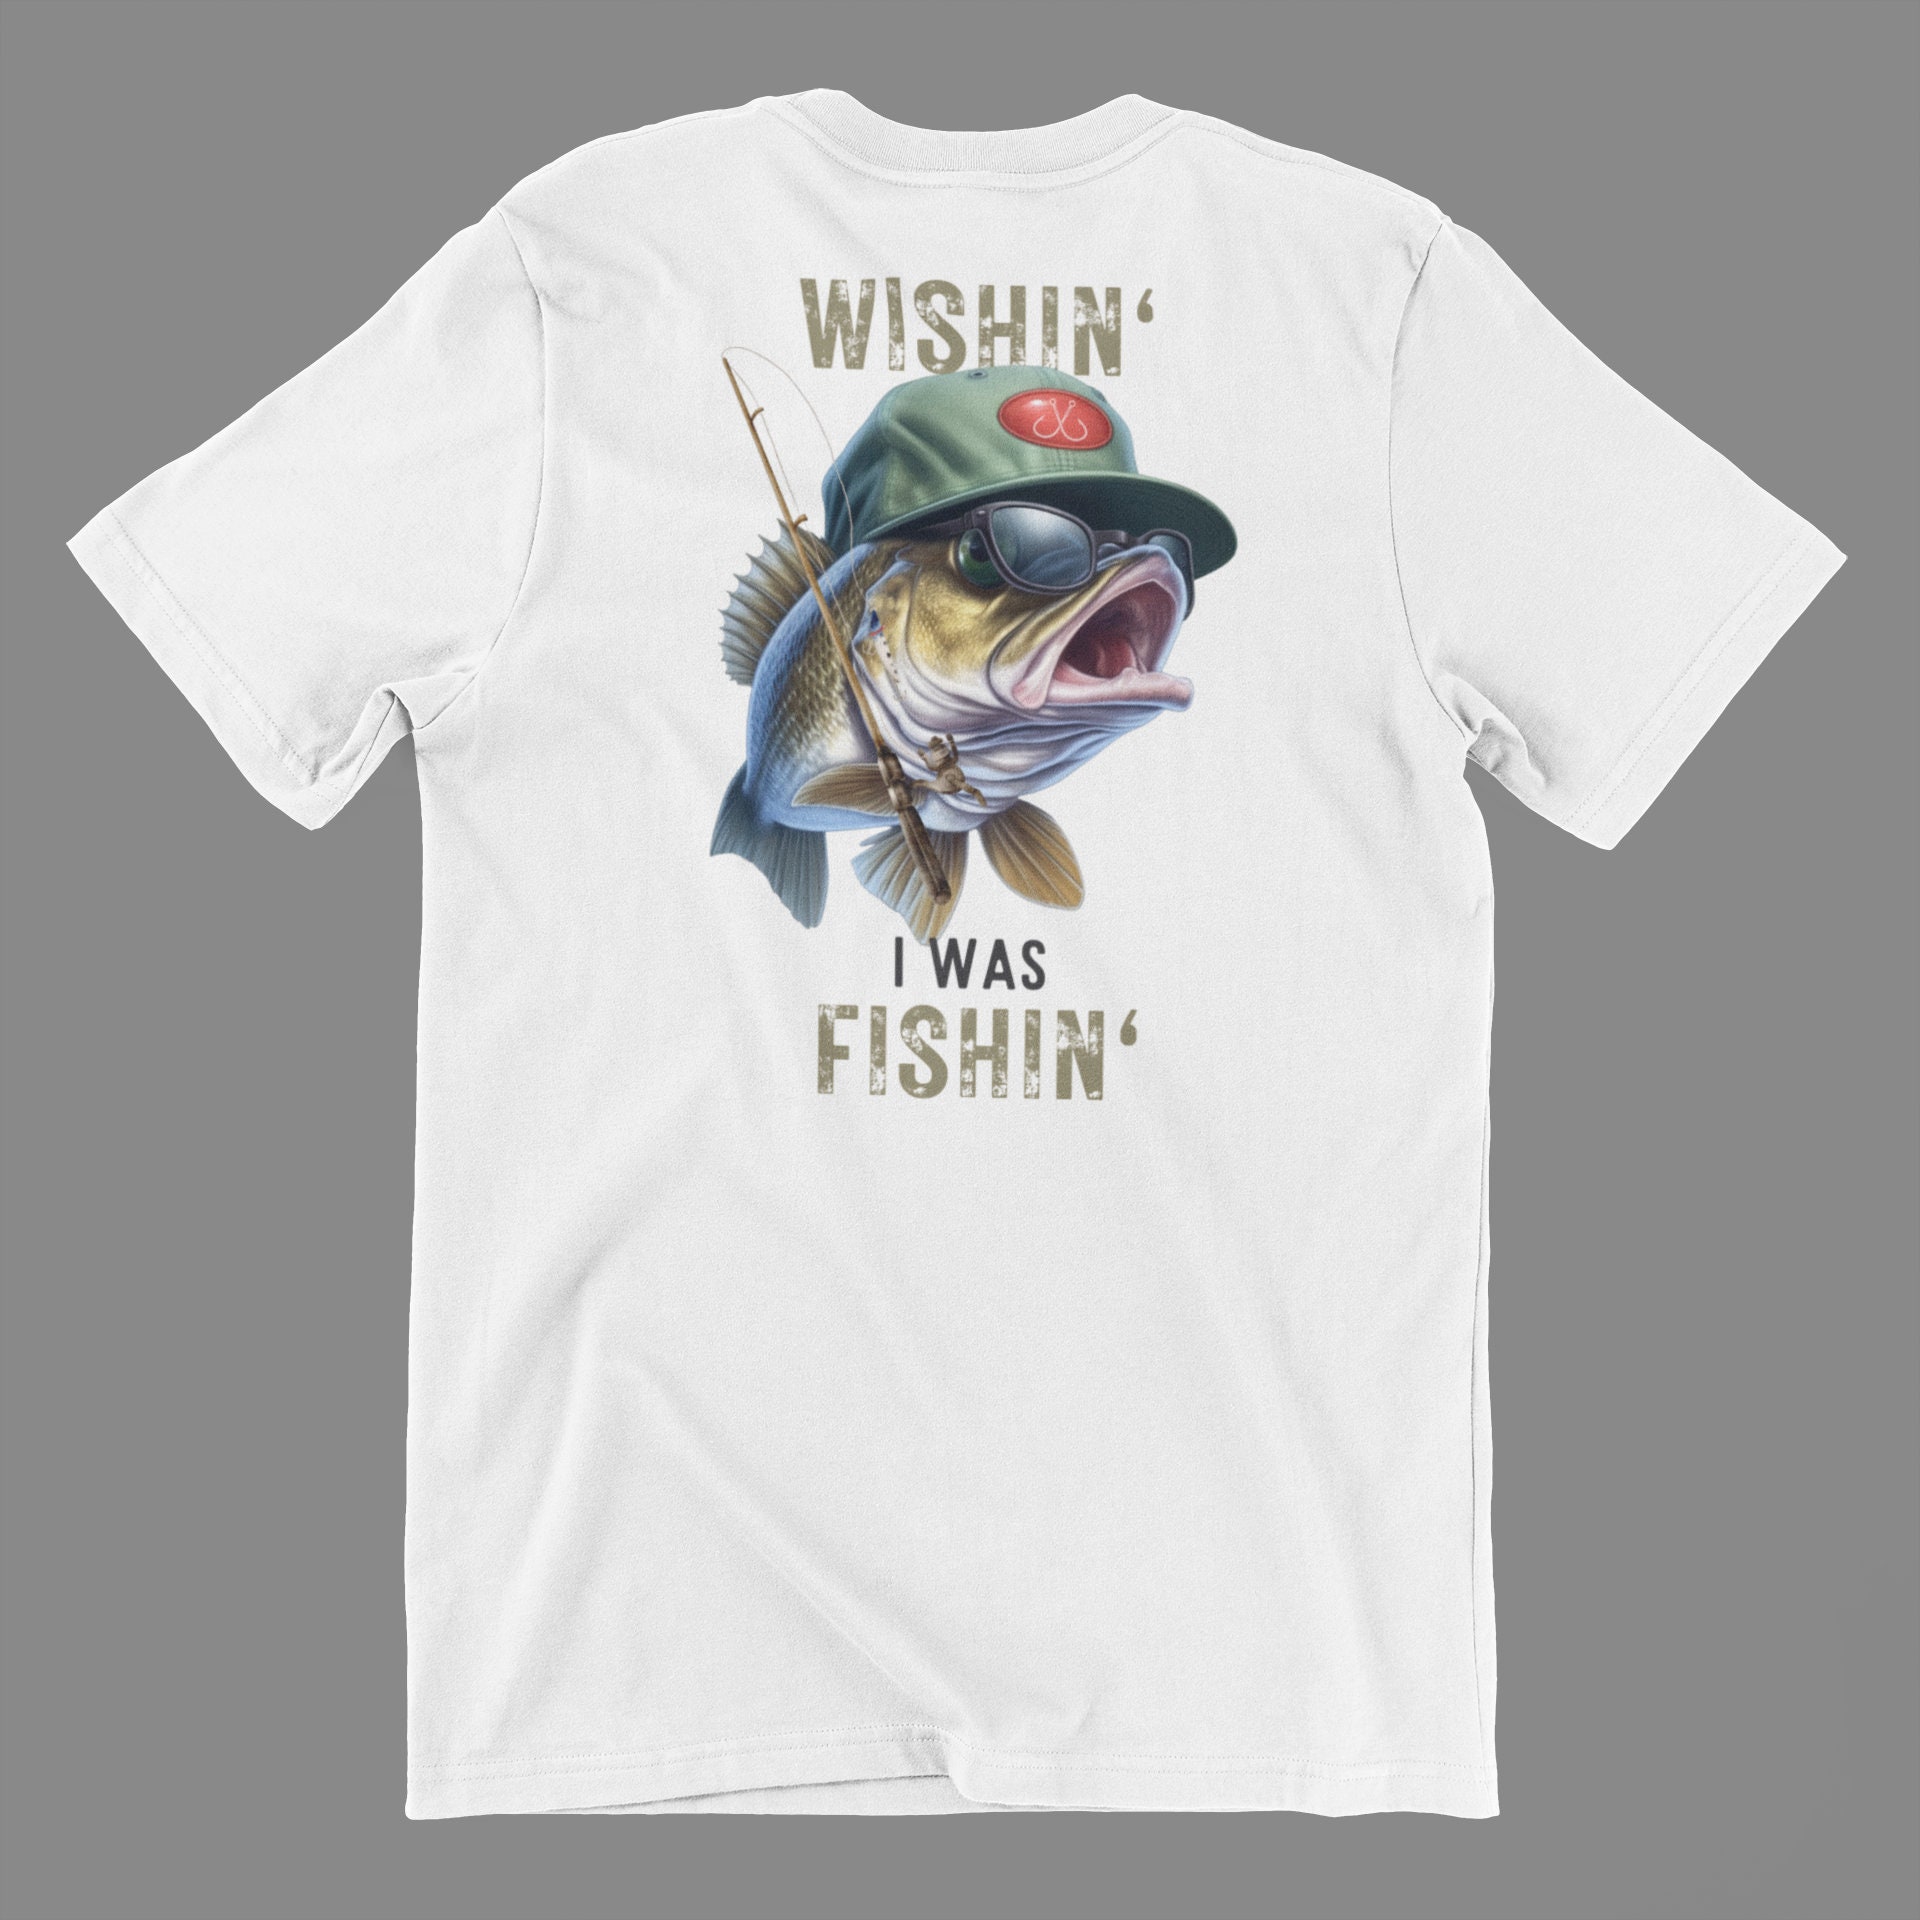 Wishin' I Was Fishin' T-shirt Design Large Mouth Bass Sublimation